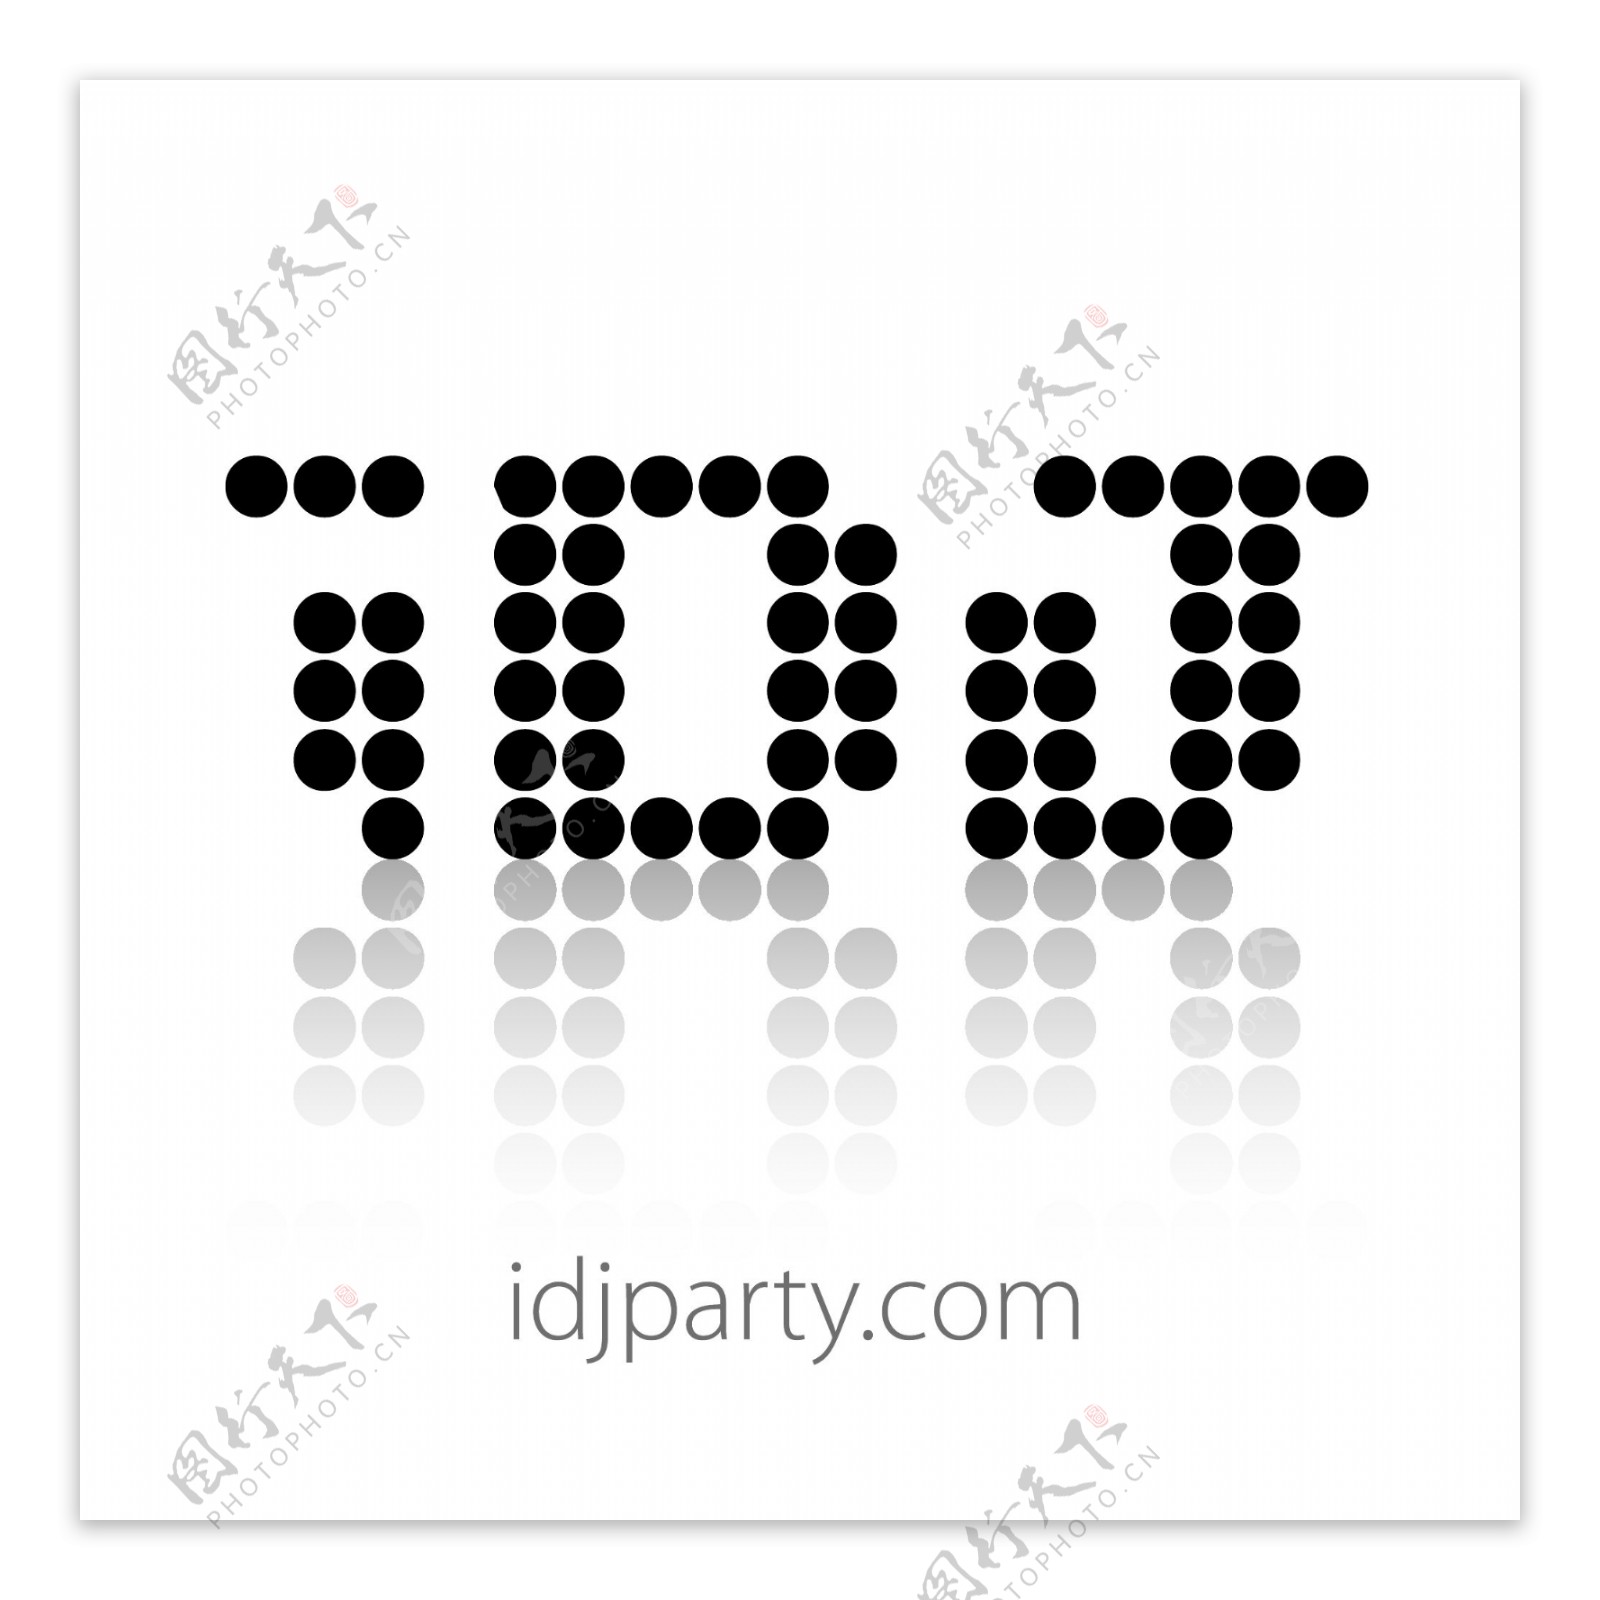 iDJpartylogo设计欣赏iDJparty音乐公司LOGO下载标志设计欣赏